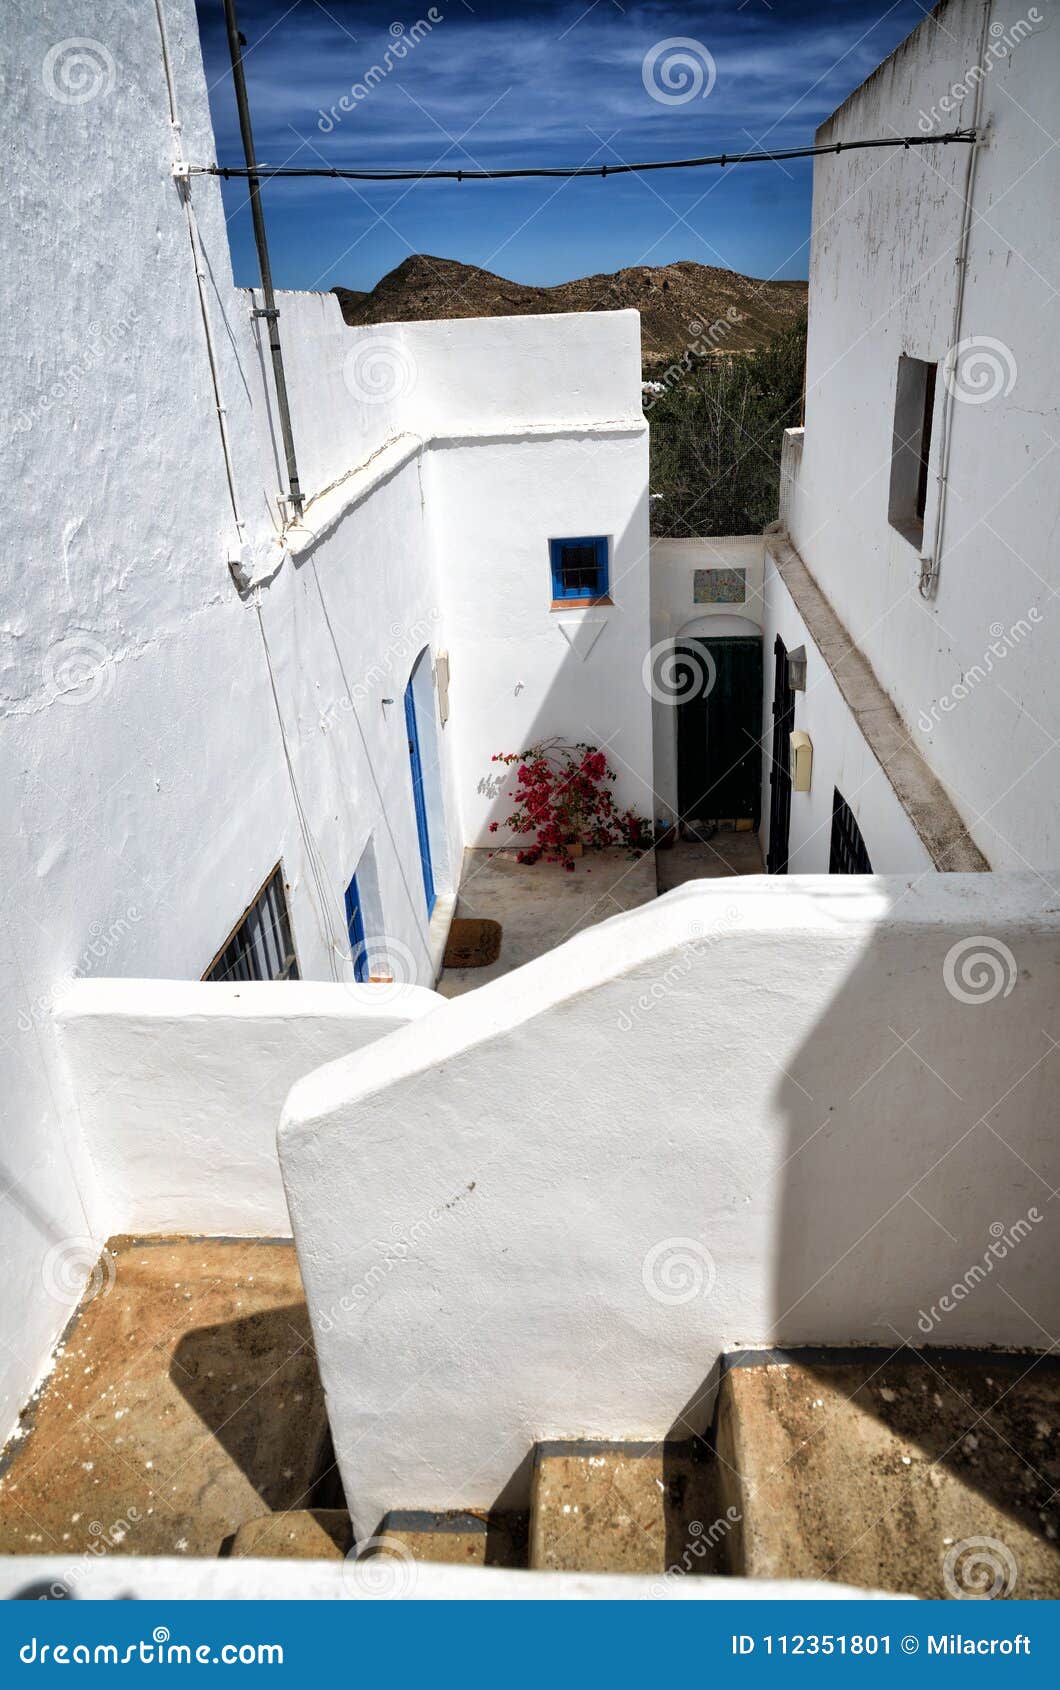 village of nijar, almeria province, andalusia, spain